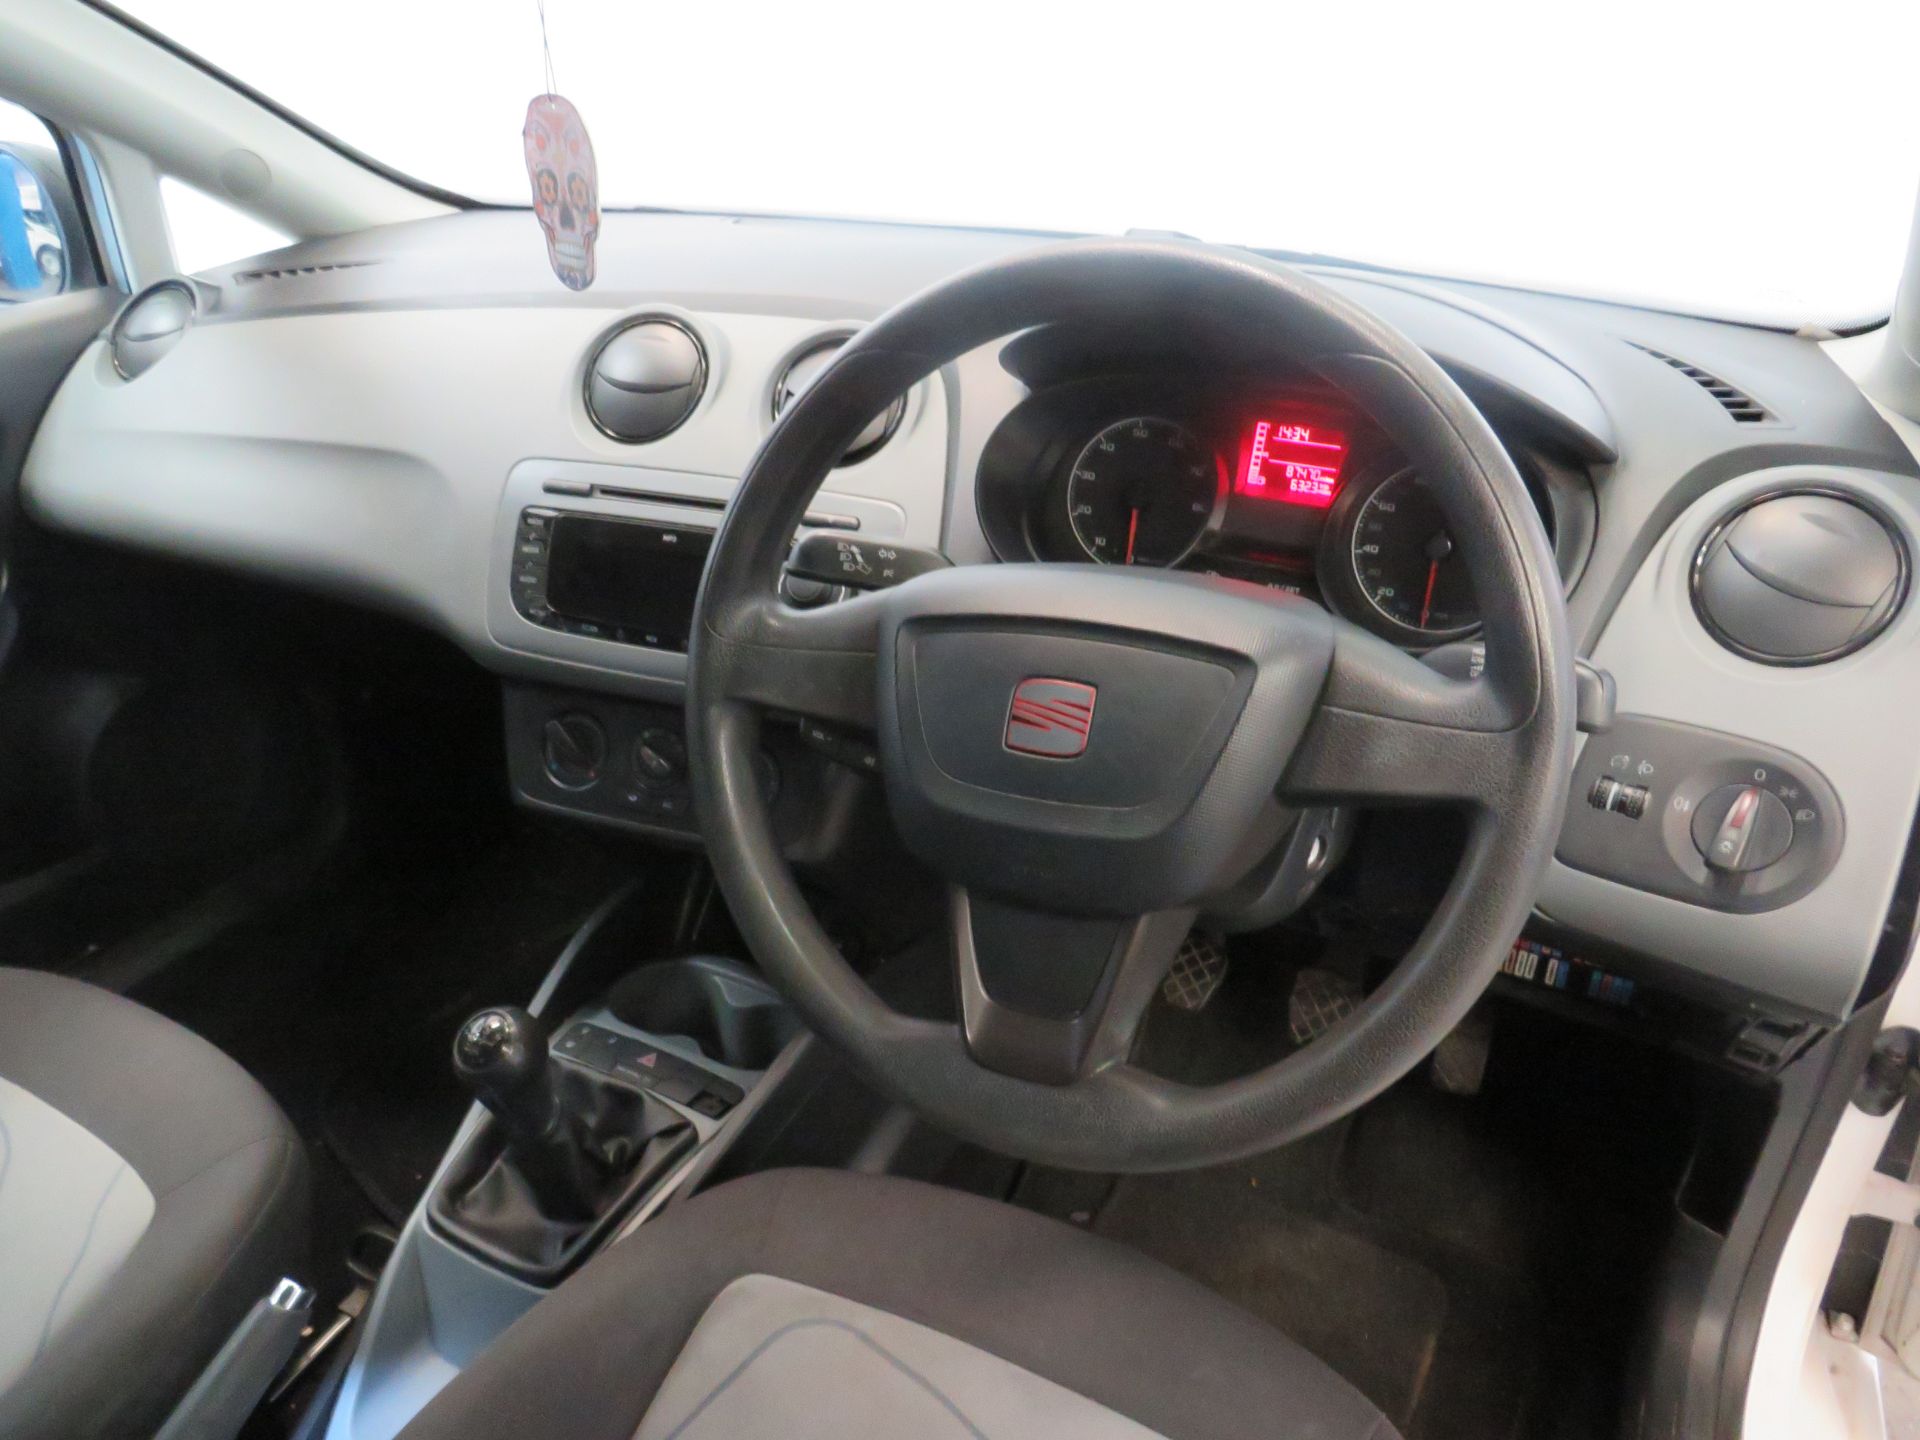 2012 Seat Ibiza S AC - 1198cc - Image 8 of 9